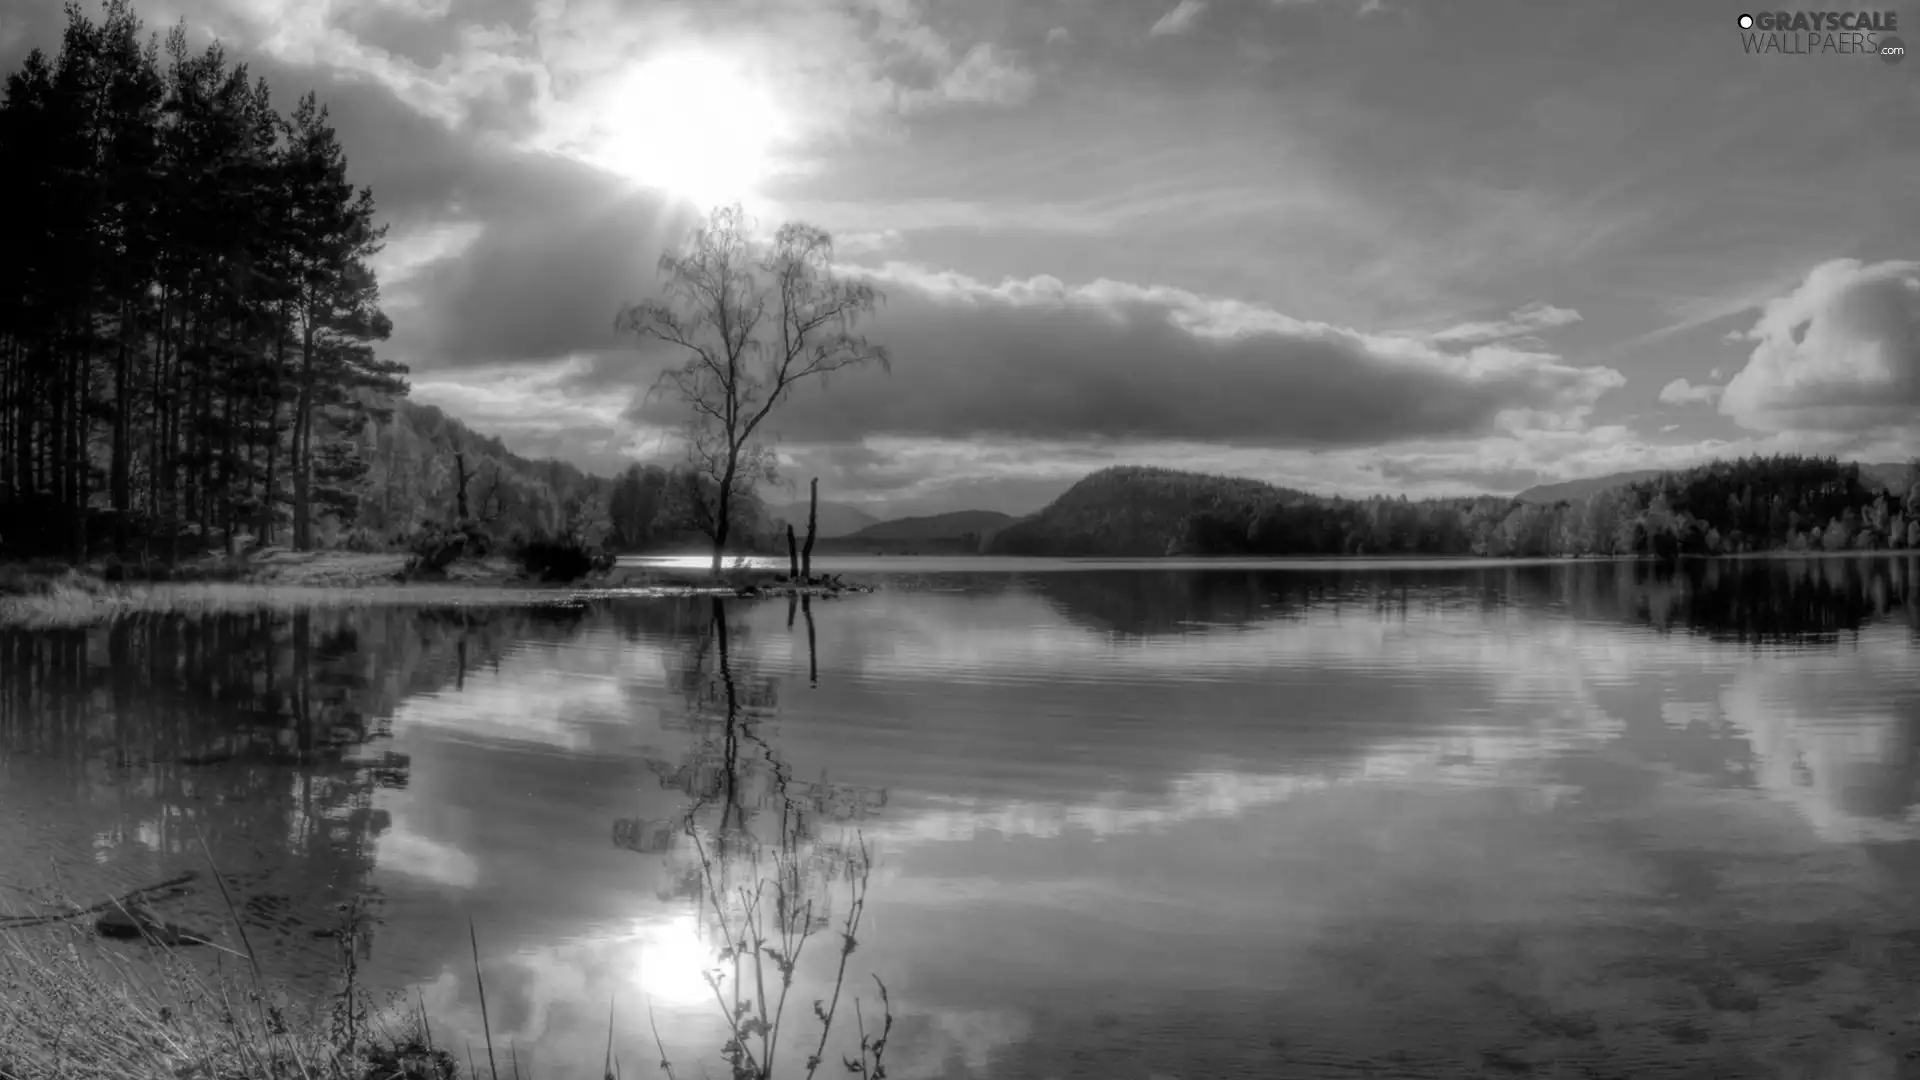 lake, reflection, autumn, forest